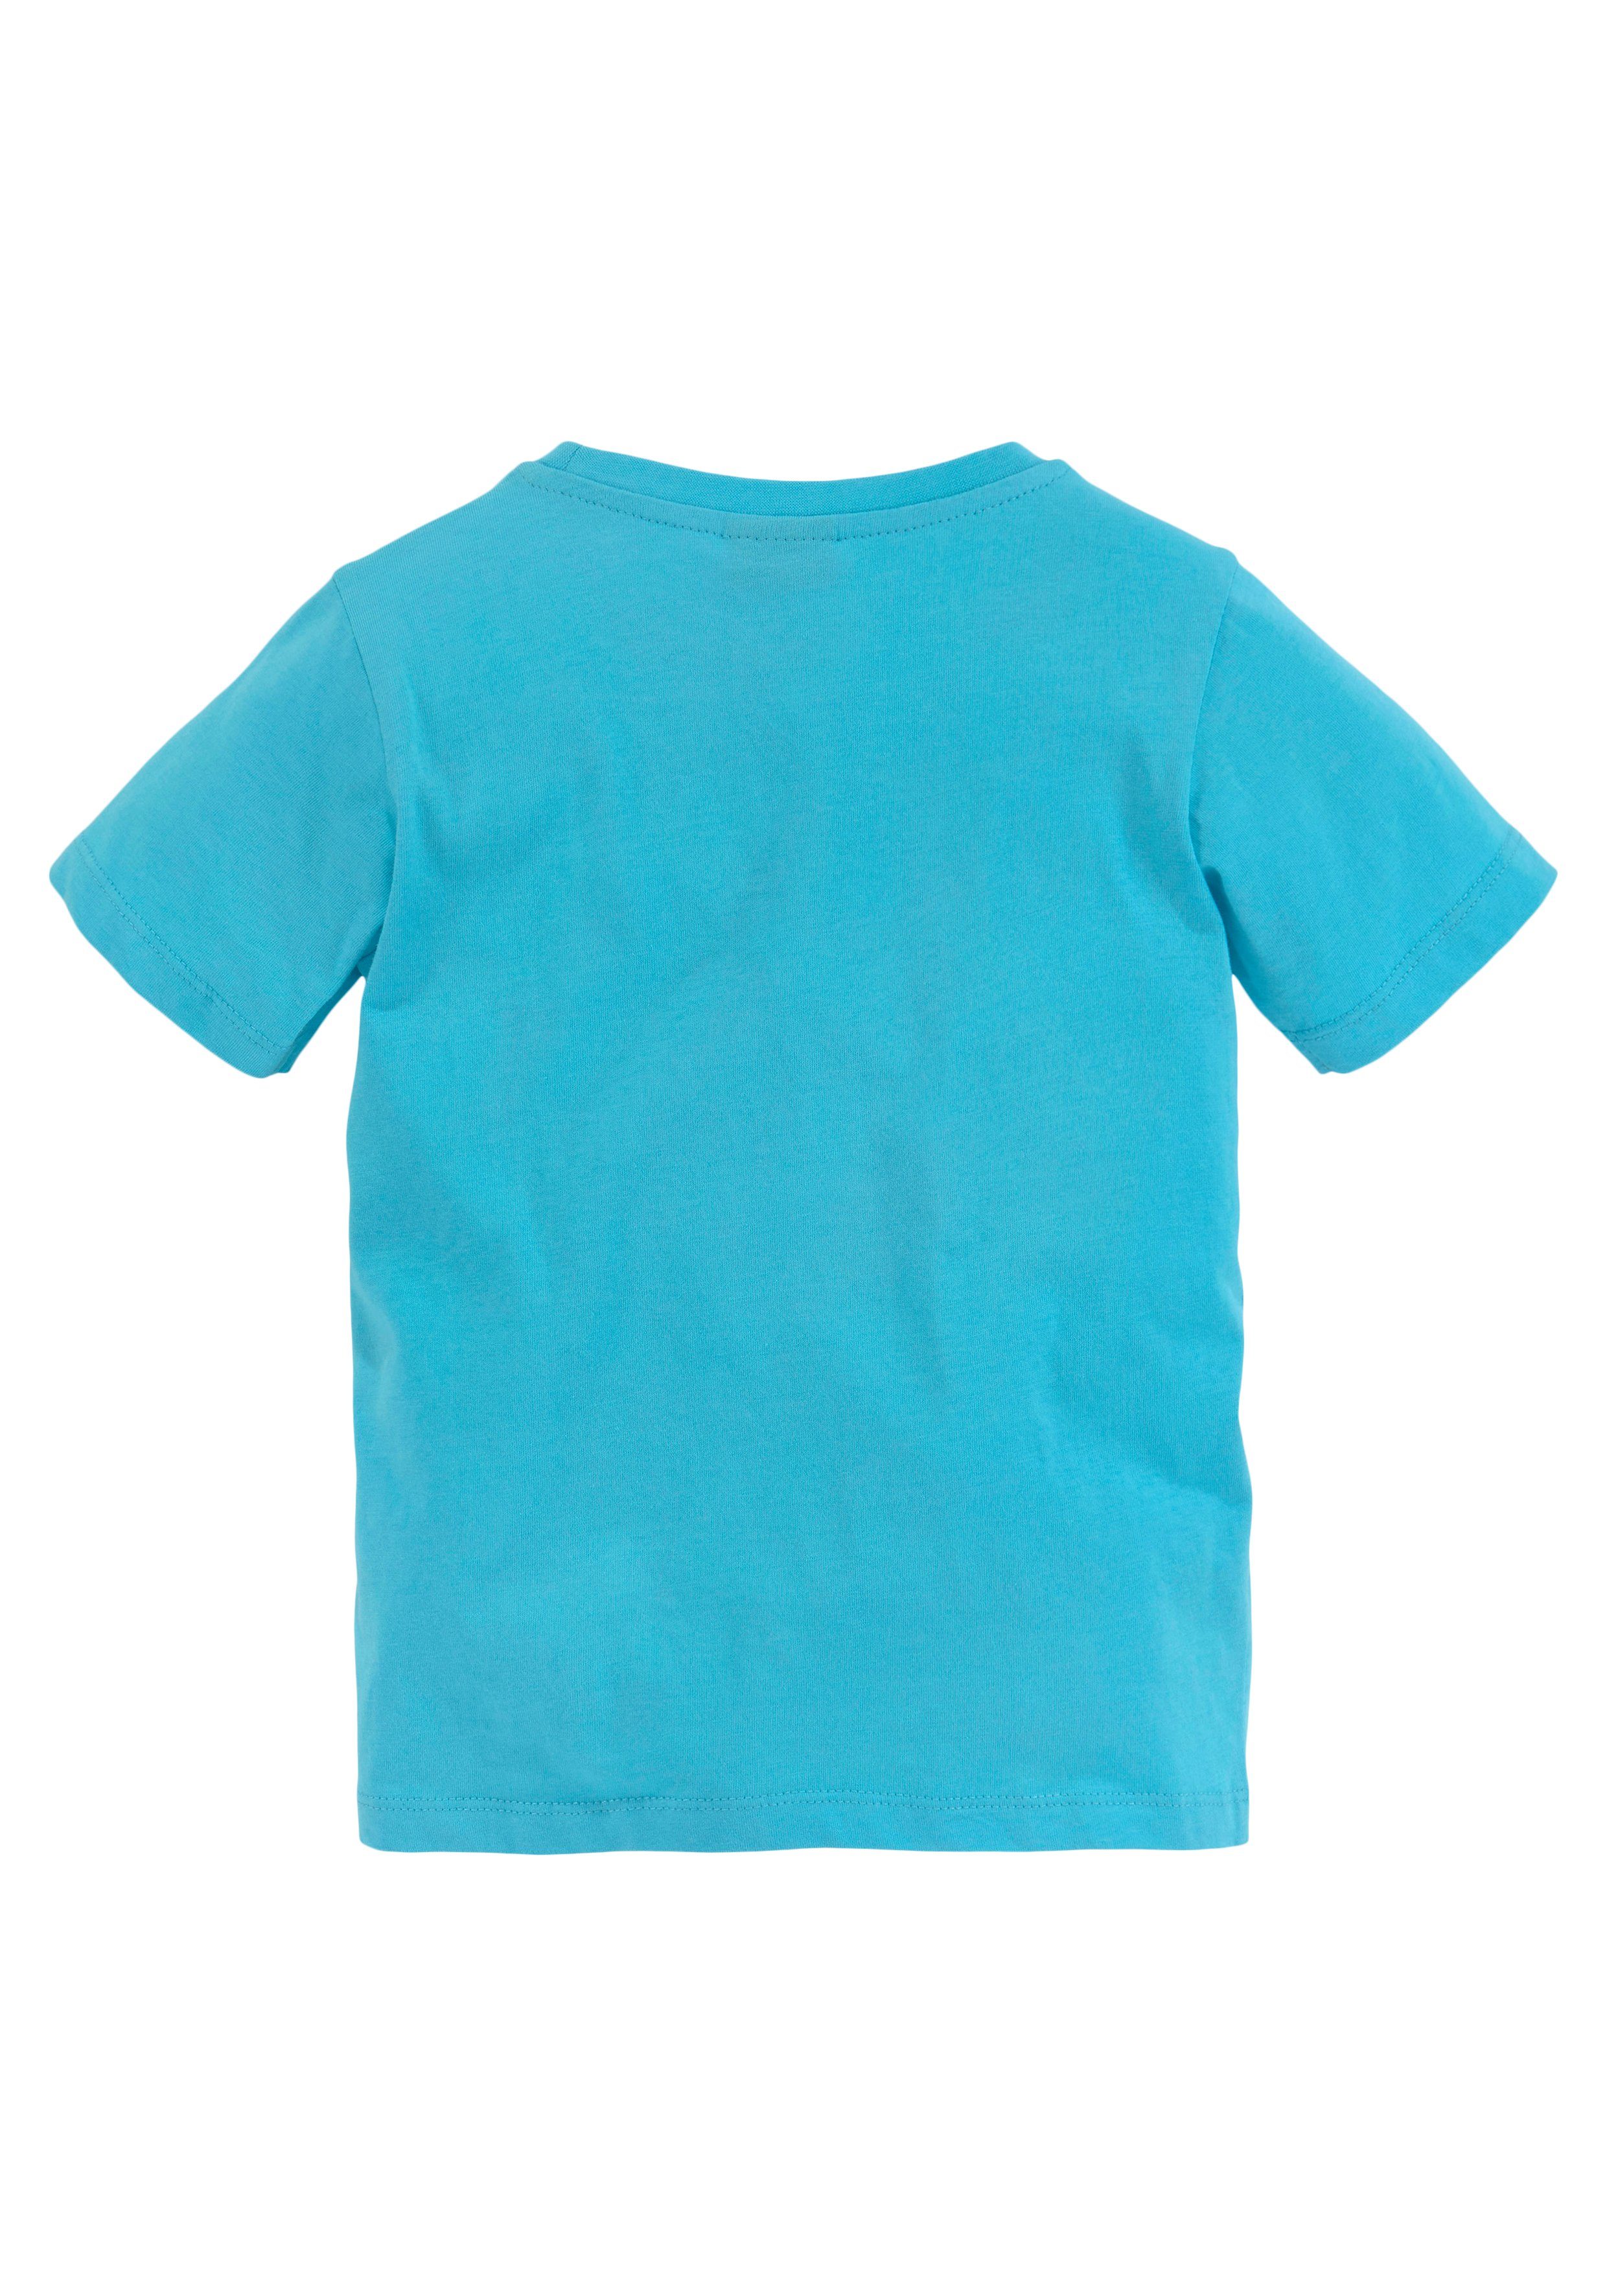 KIDSWORLD T-Shirt BEST (Packung, 2er-Pack) JOB EVER!